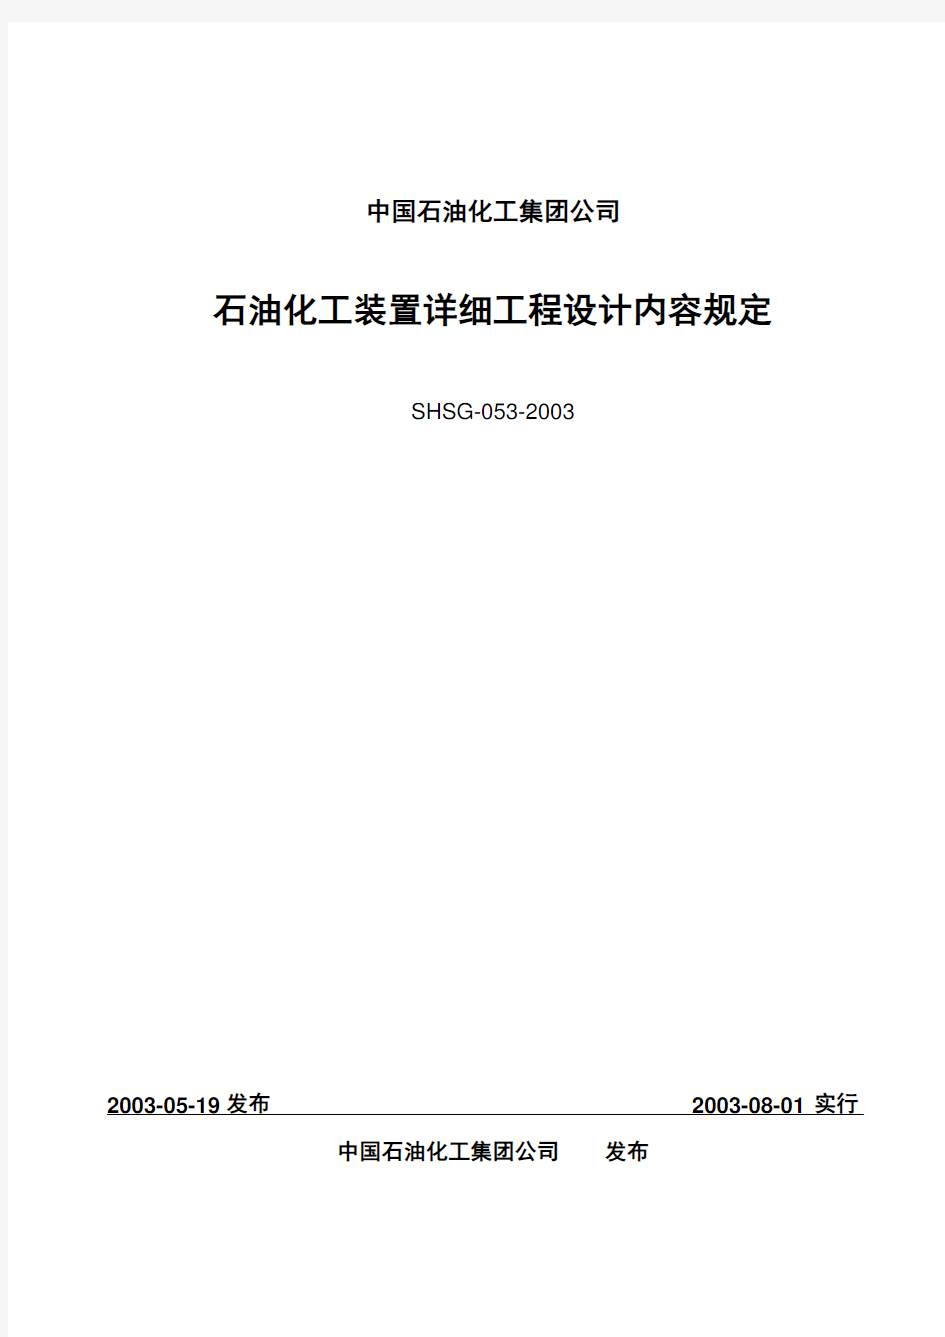 SHSG-053-2003石油化工装置详细工程设计内容规定.pdf